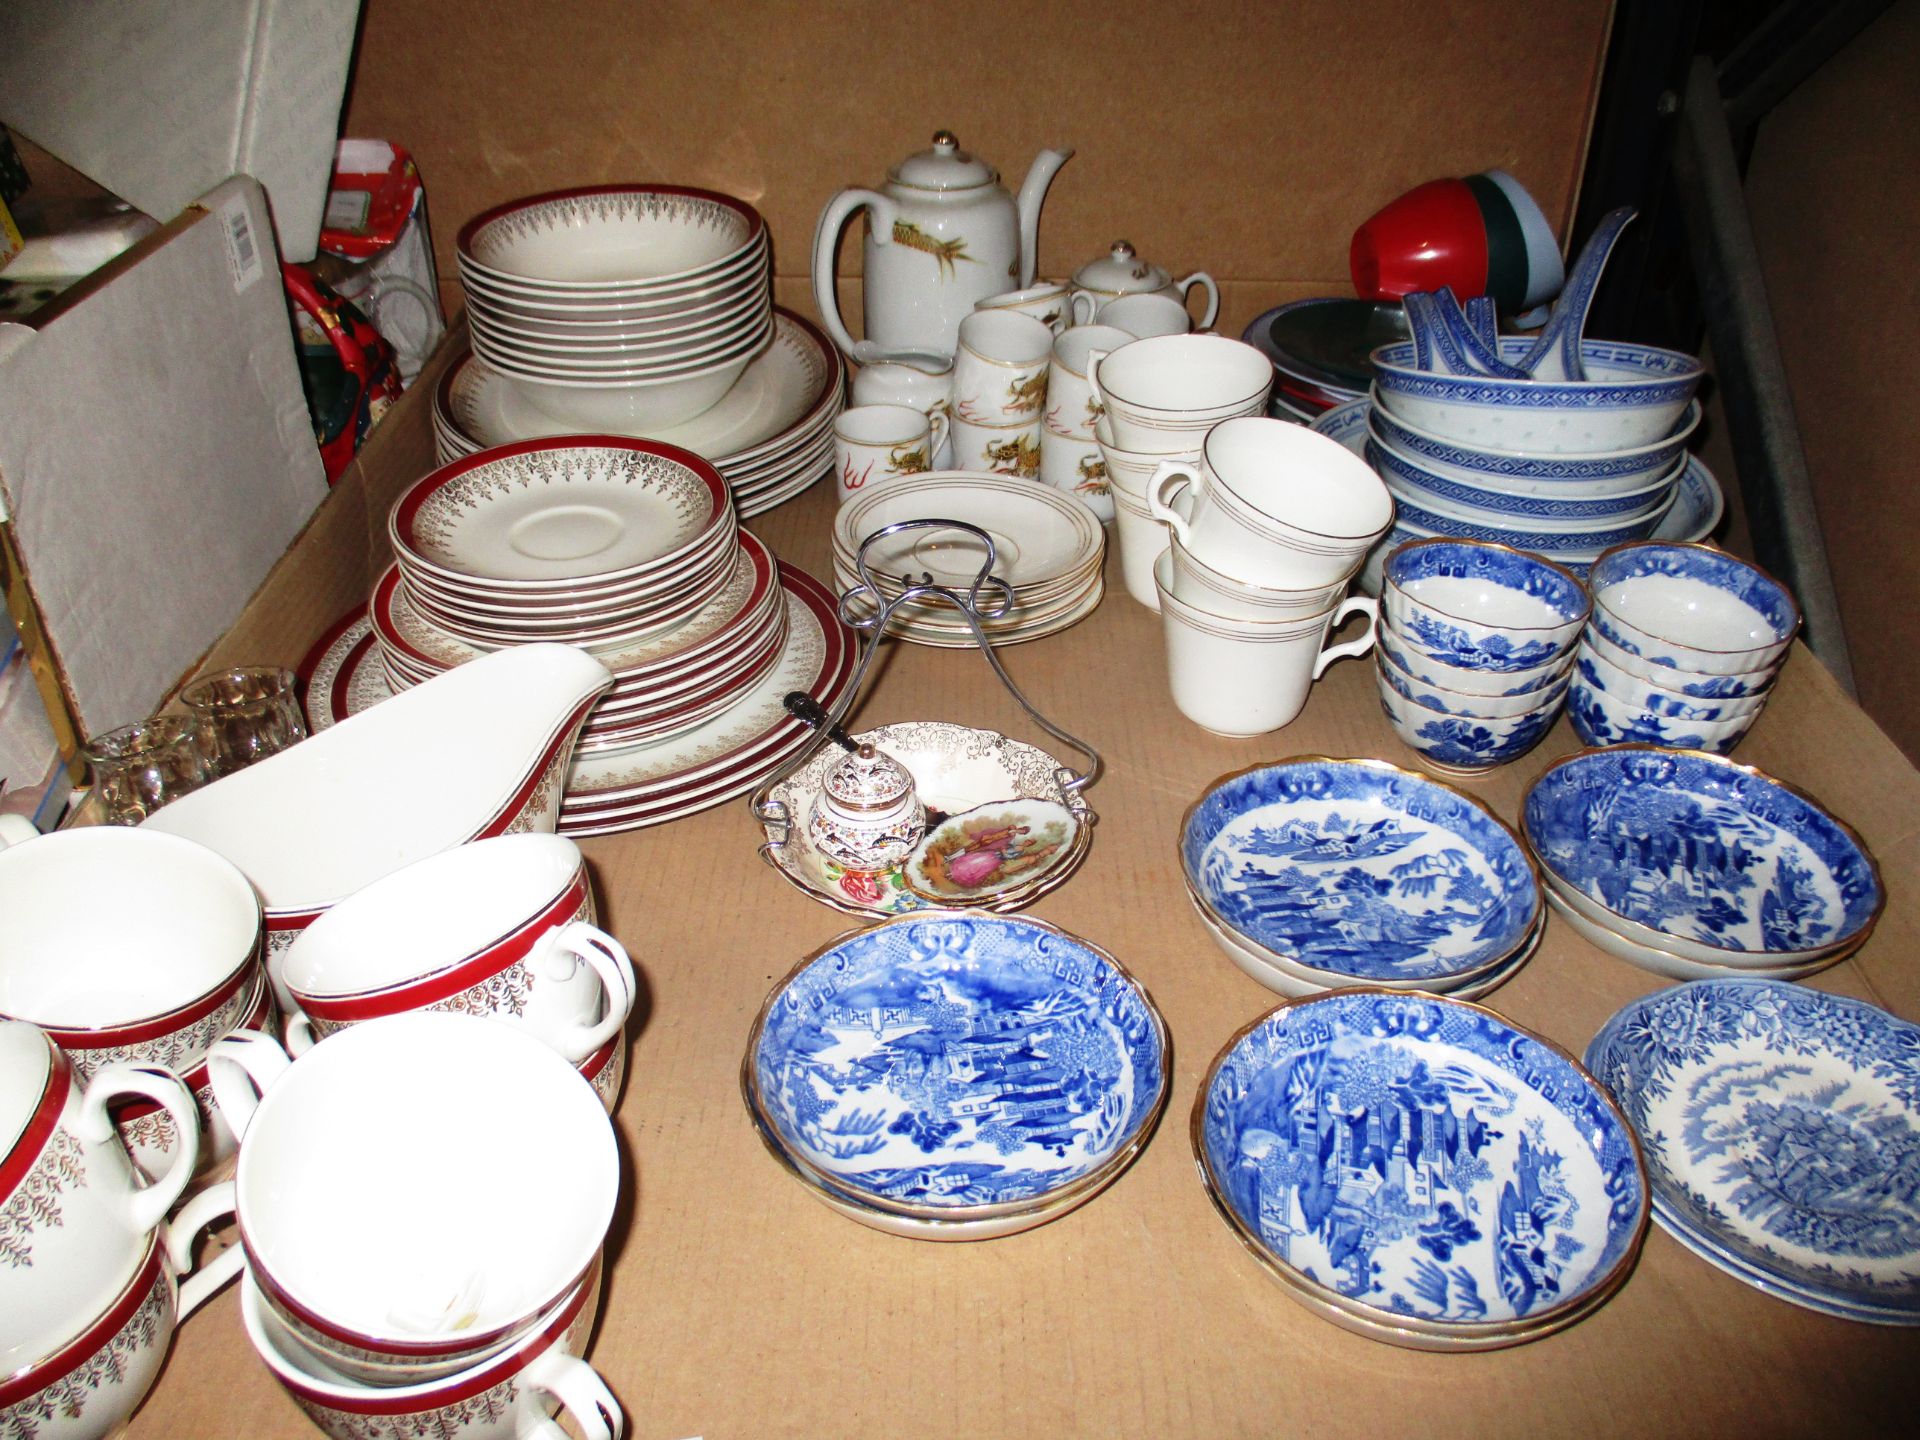 39 x piece Myott "Royalty" tea service, quantity of blue and white china,